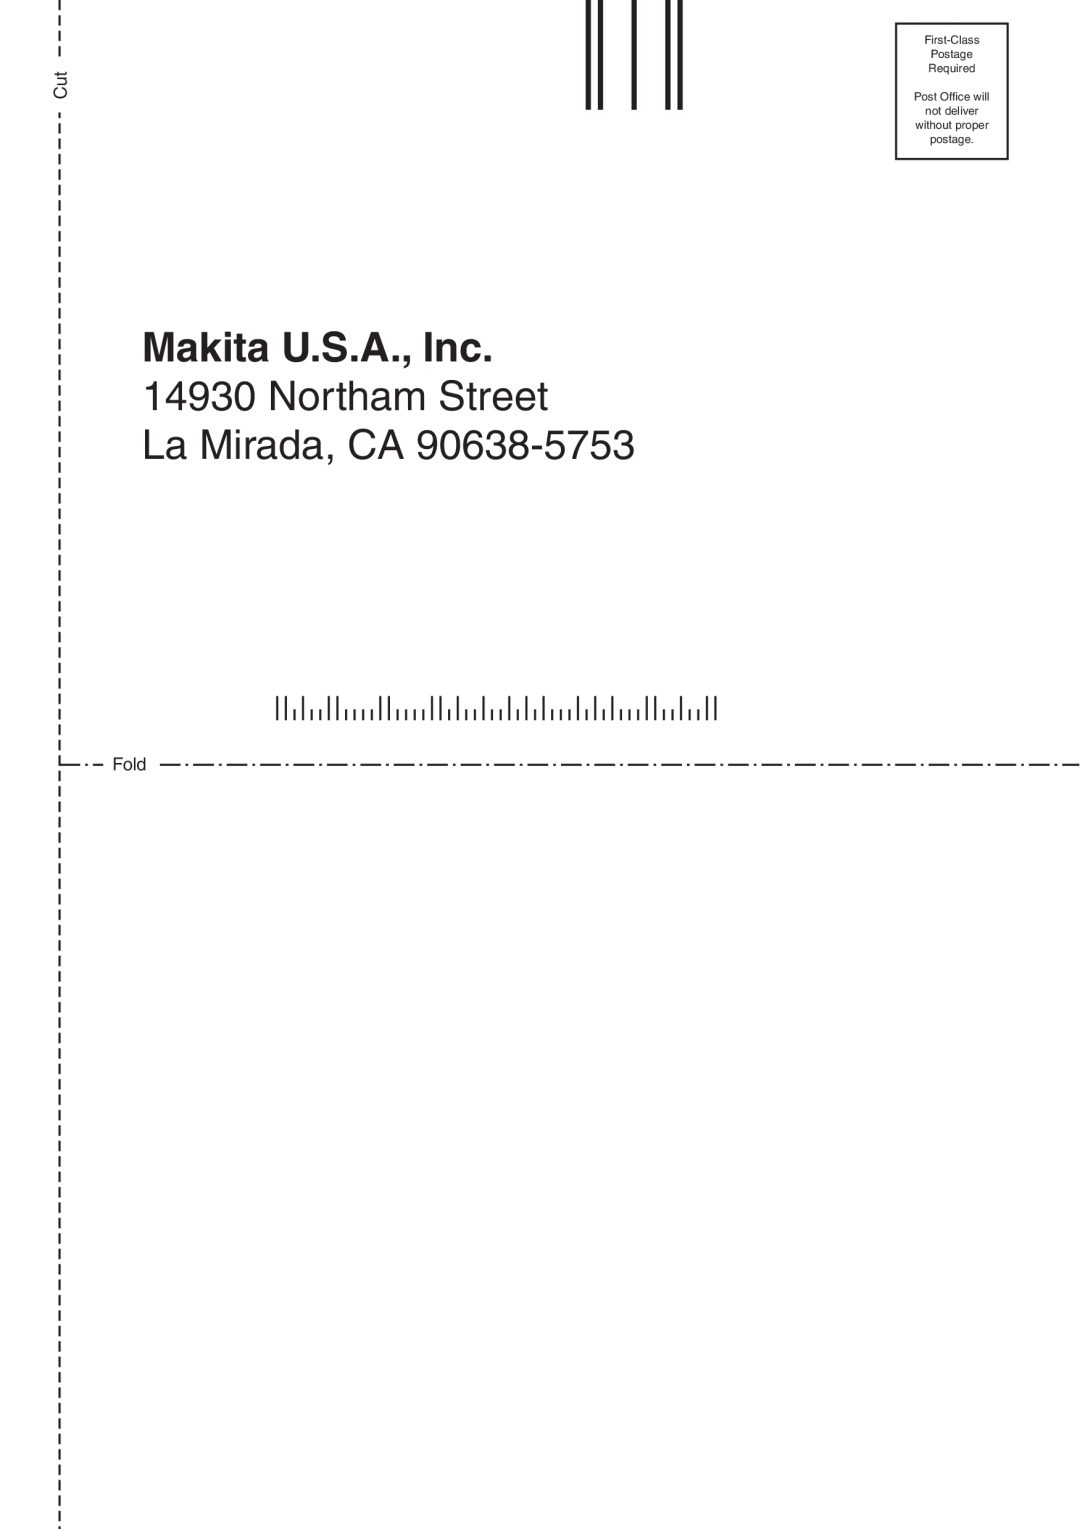 Makita 9566CV instruction manual Makita U.S.A., Inc, Northam Street La Mirada, CA, Fold, without proper postage 